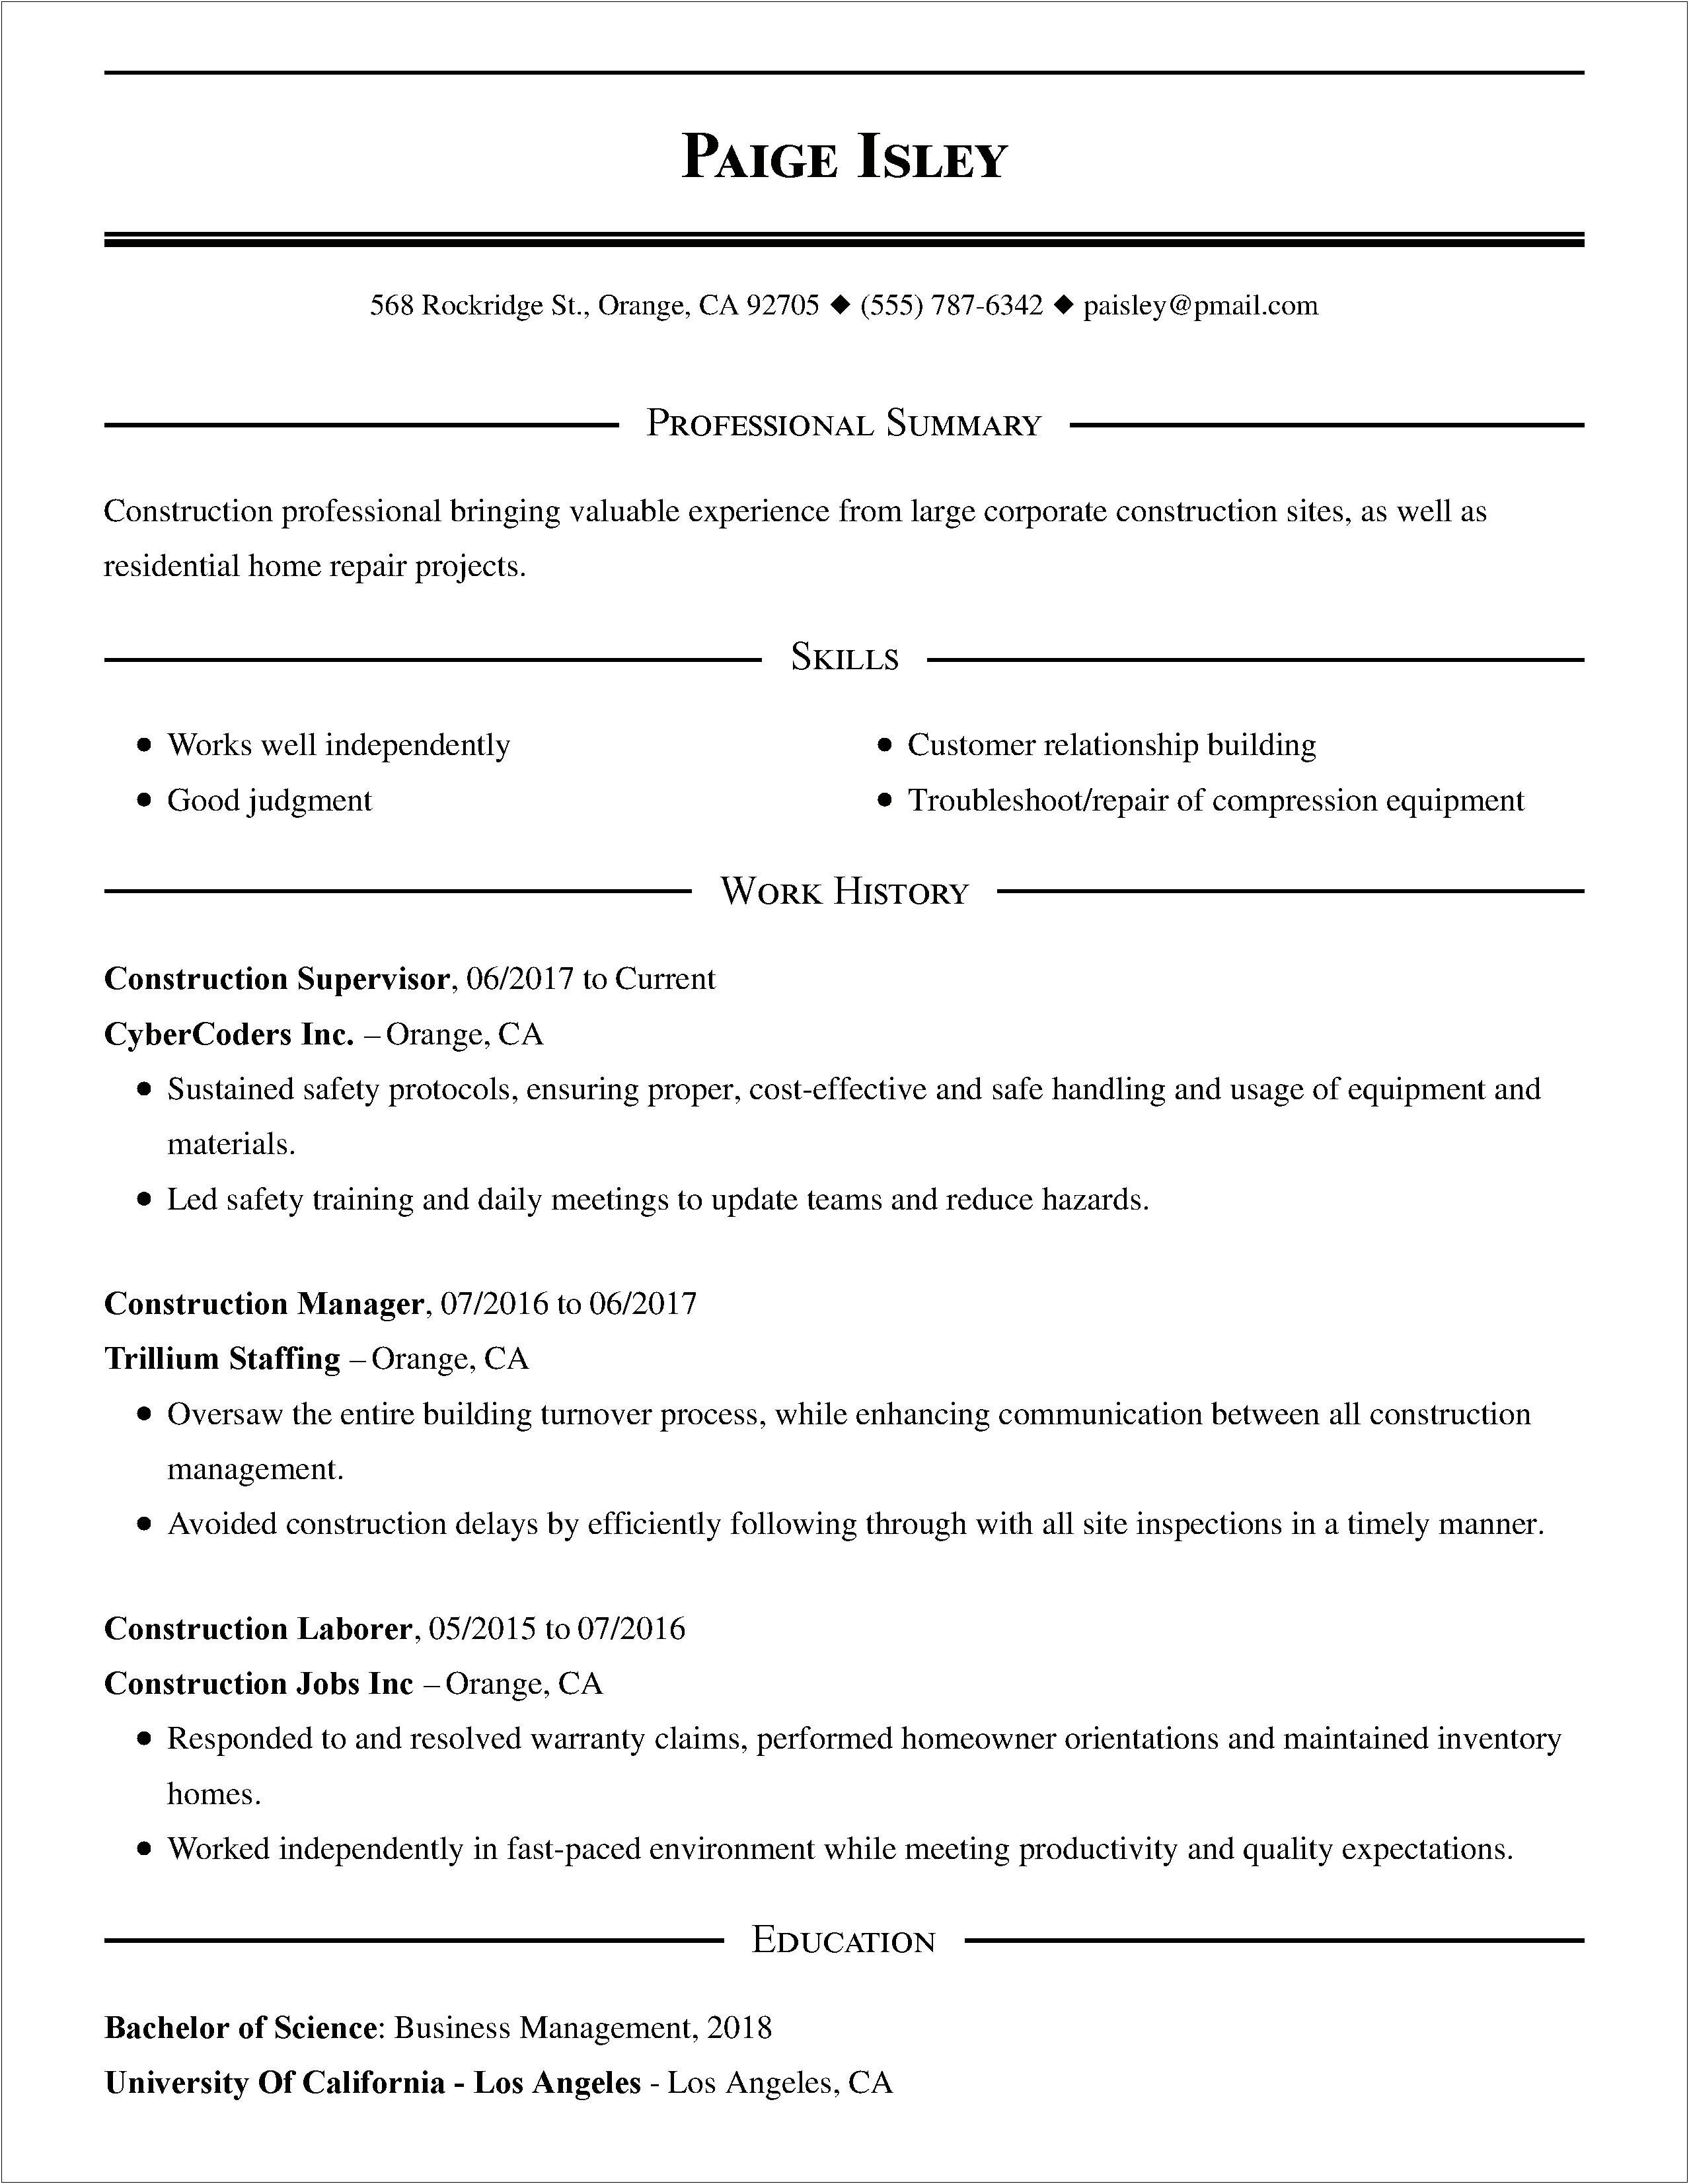 Free Professional Resume Templates 2017